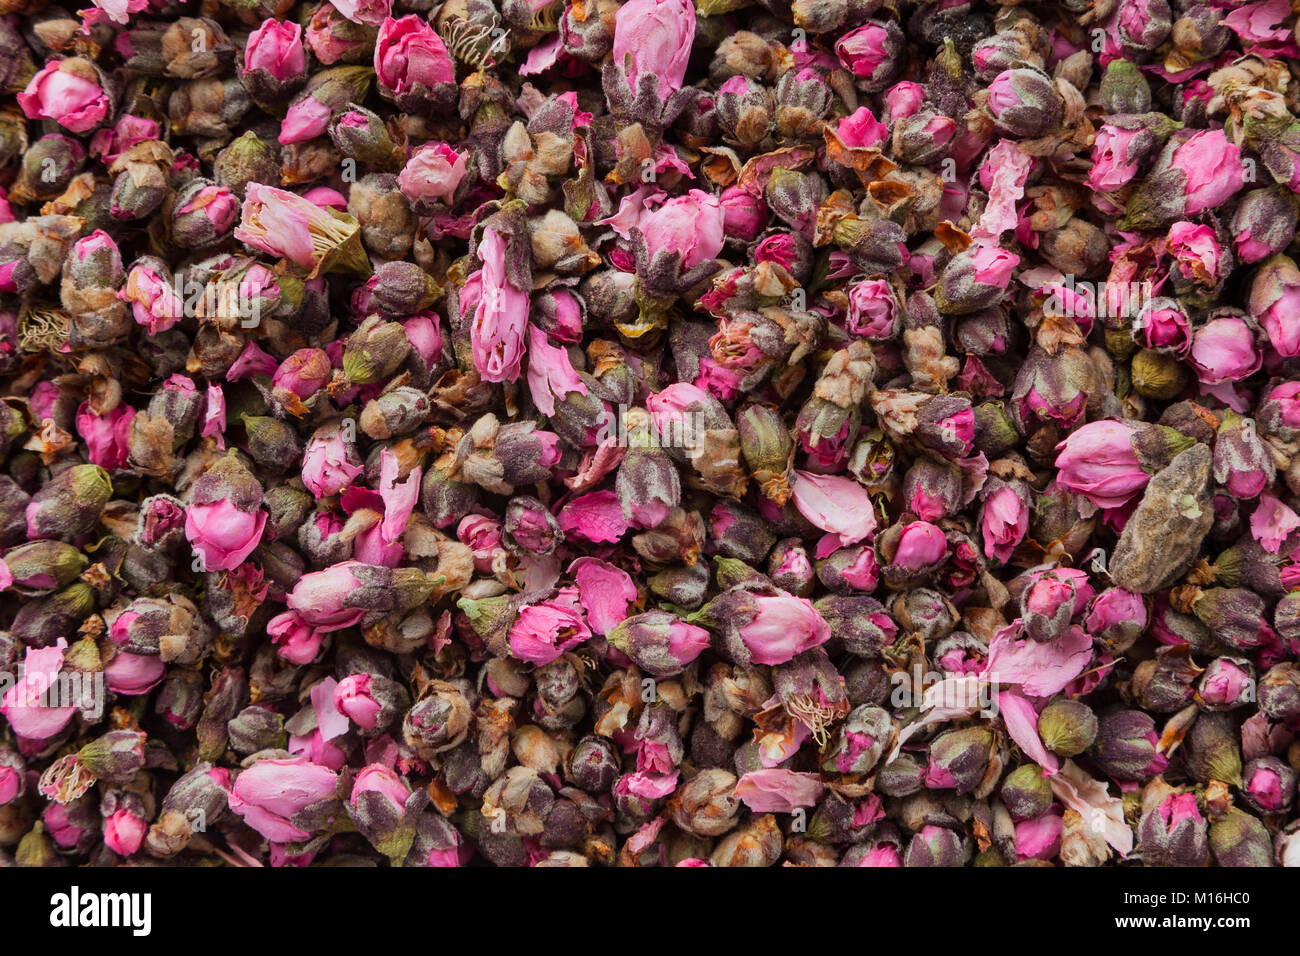 Fiori di tè texture. Peach blossom tè con limone. Fase organica essiccata fiore foglie di tè Foto Stock